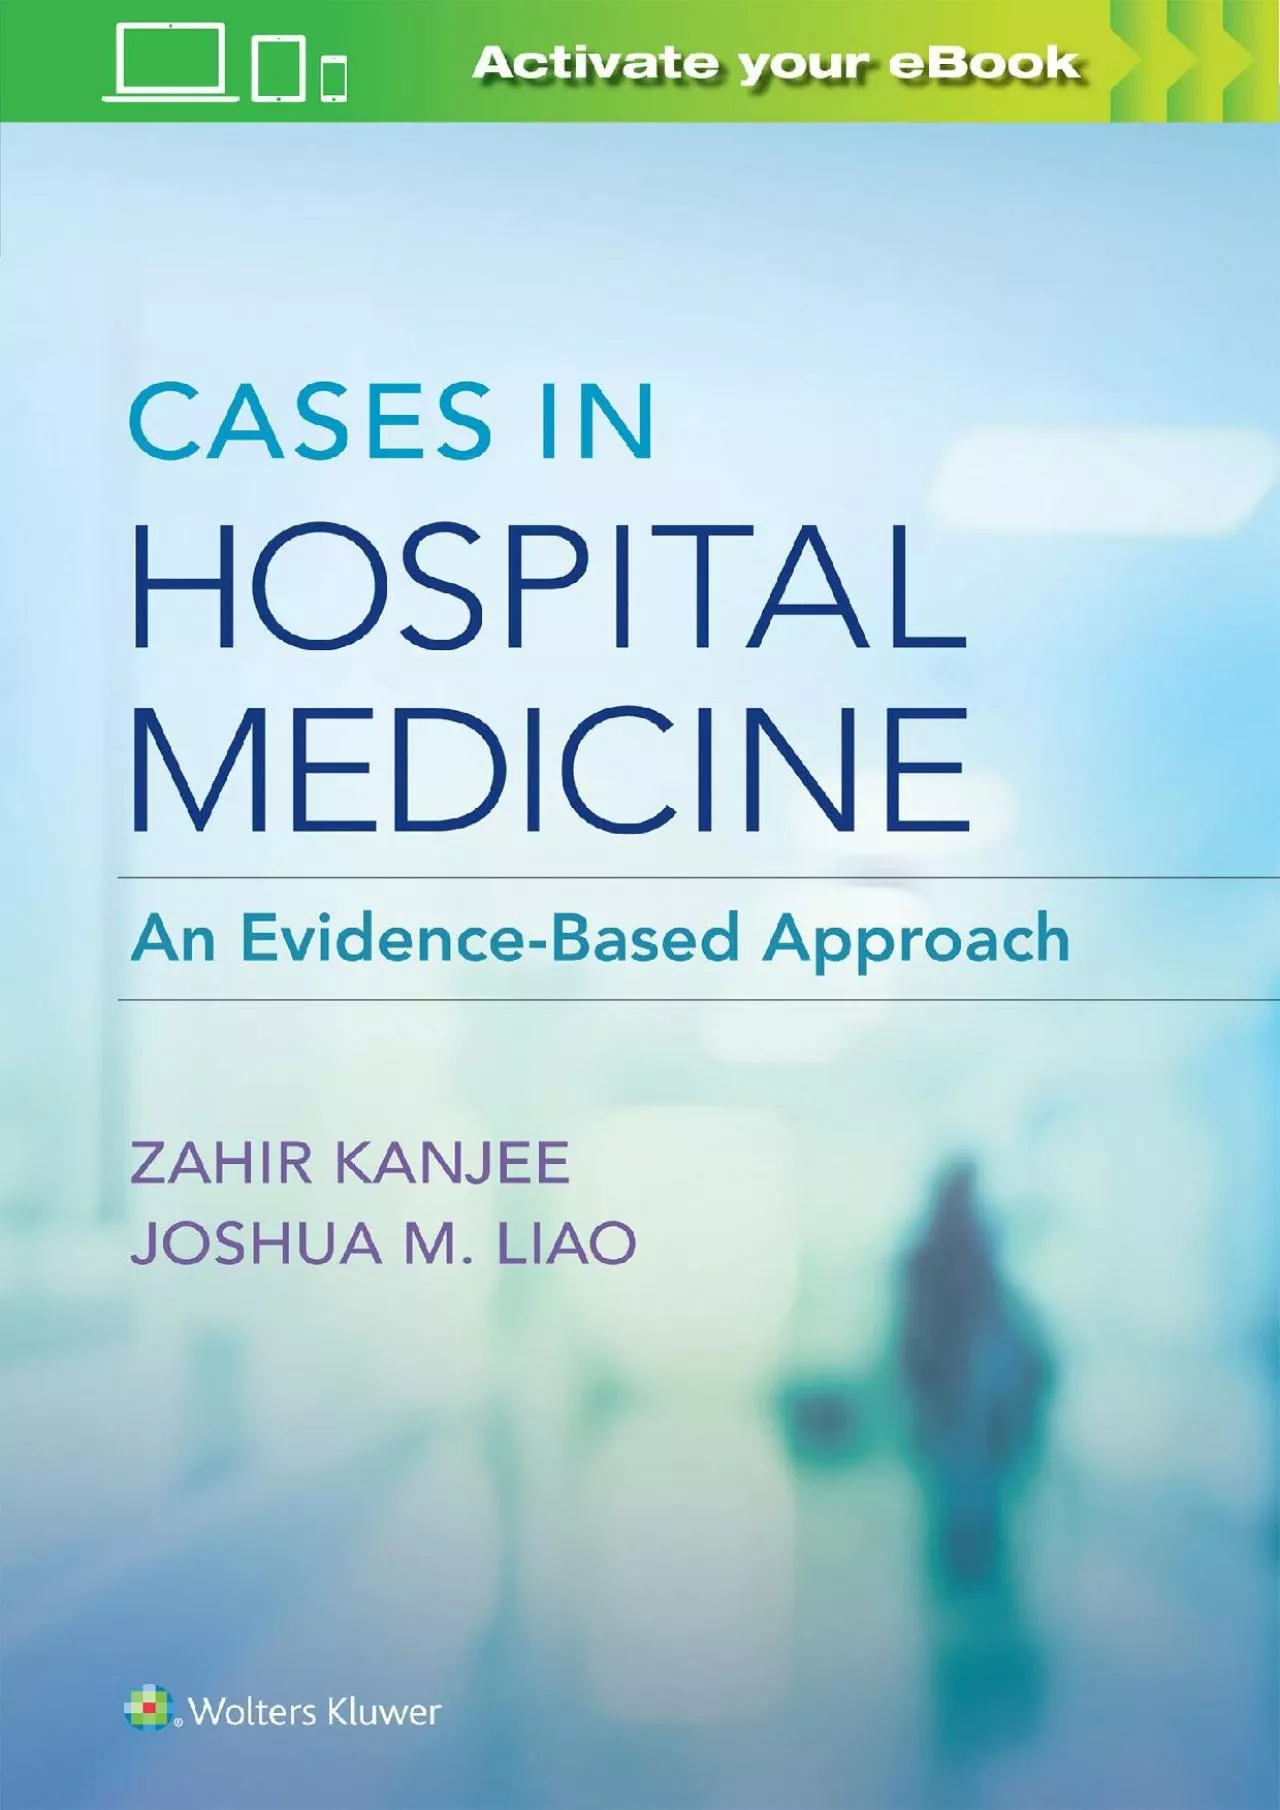 (BOOK)-Cases in Hospital Medicine